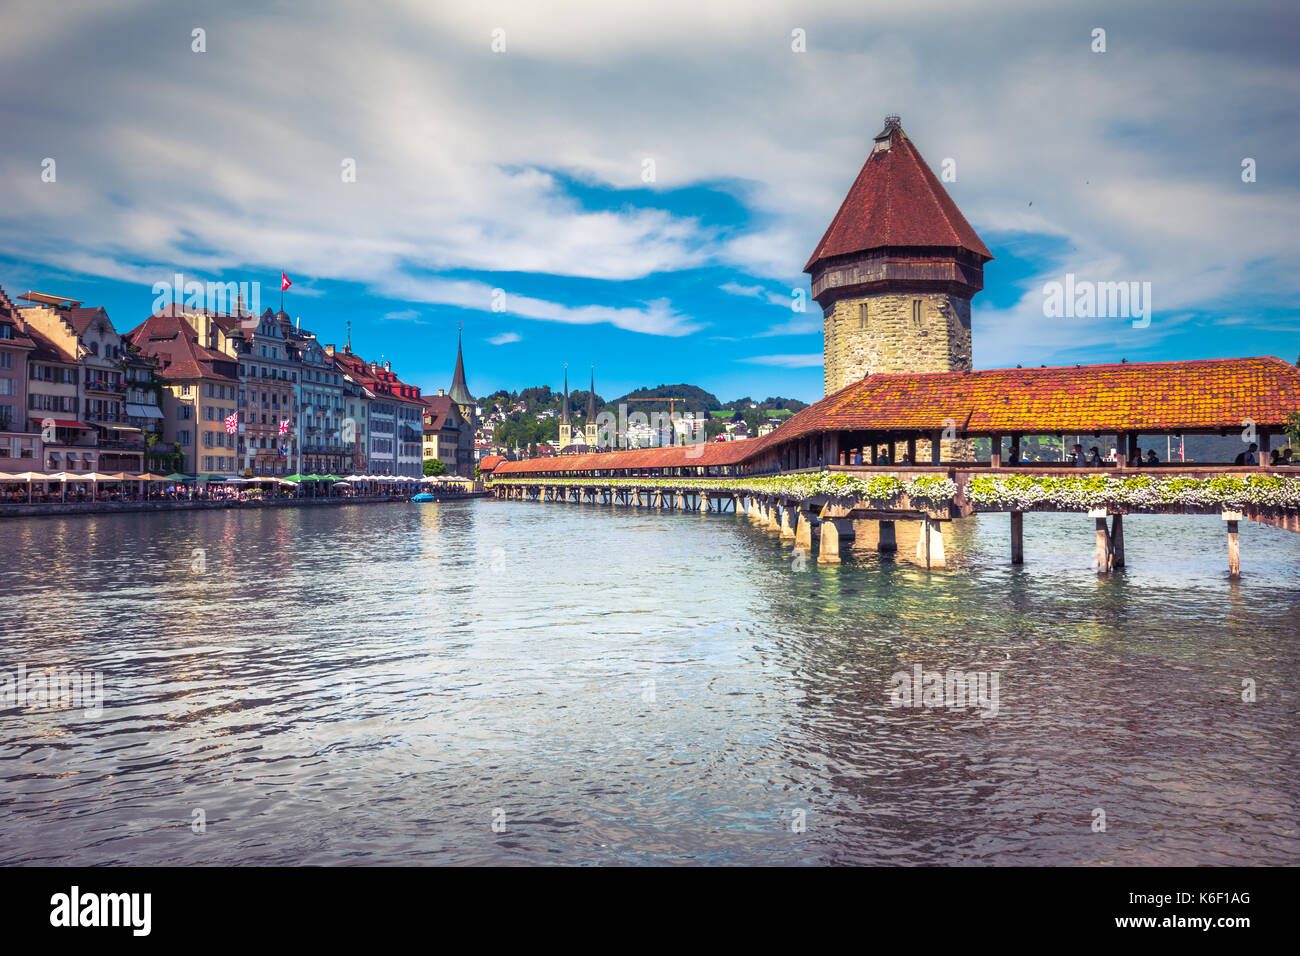 Chapel Bridge and Water Tower in Luzern - Switzerland Stock Photo